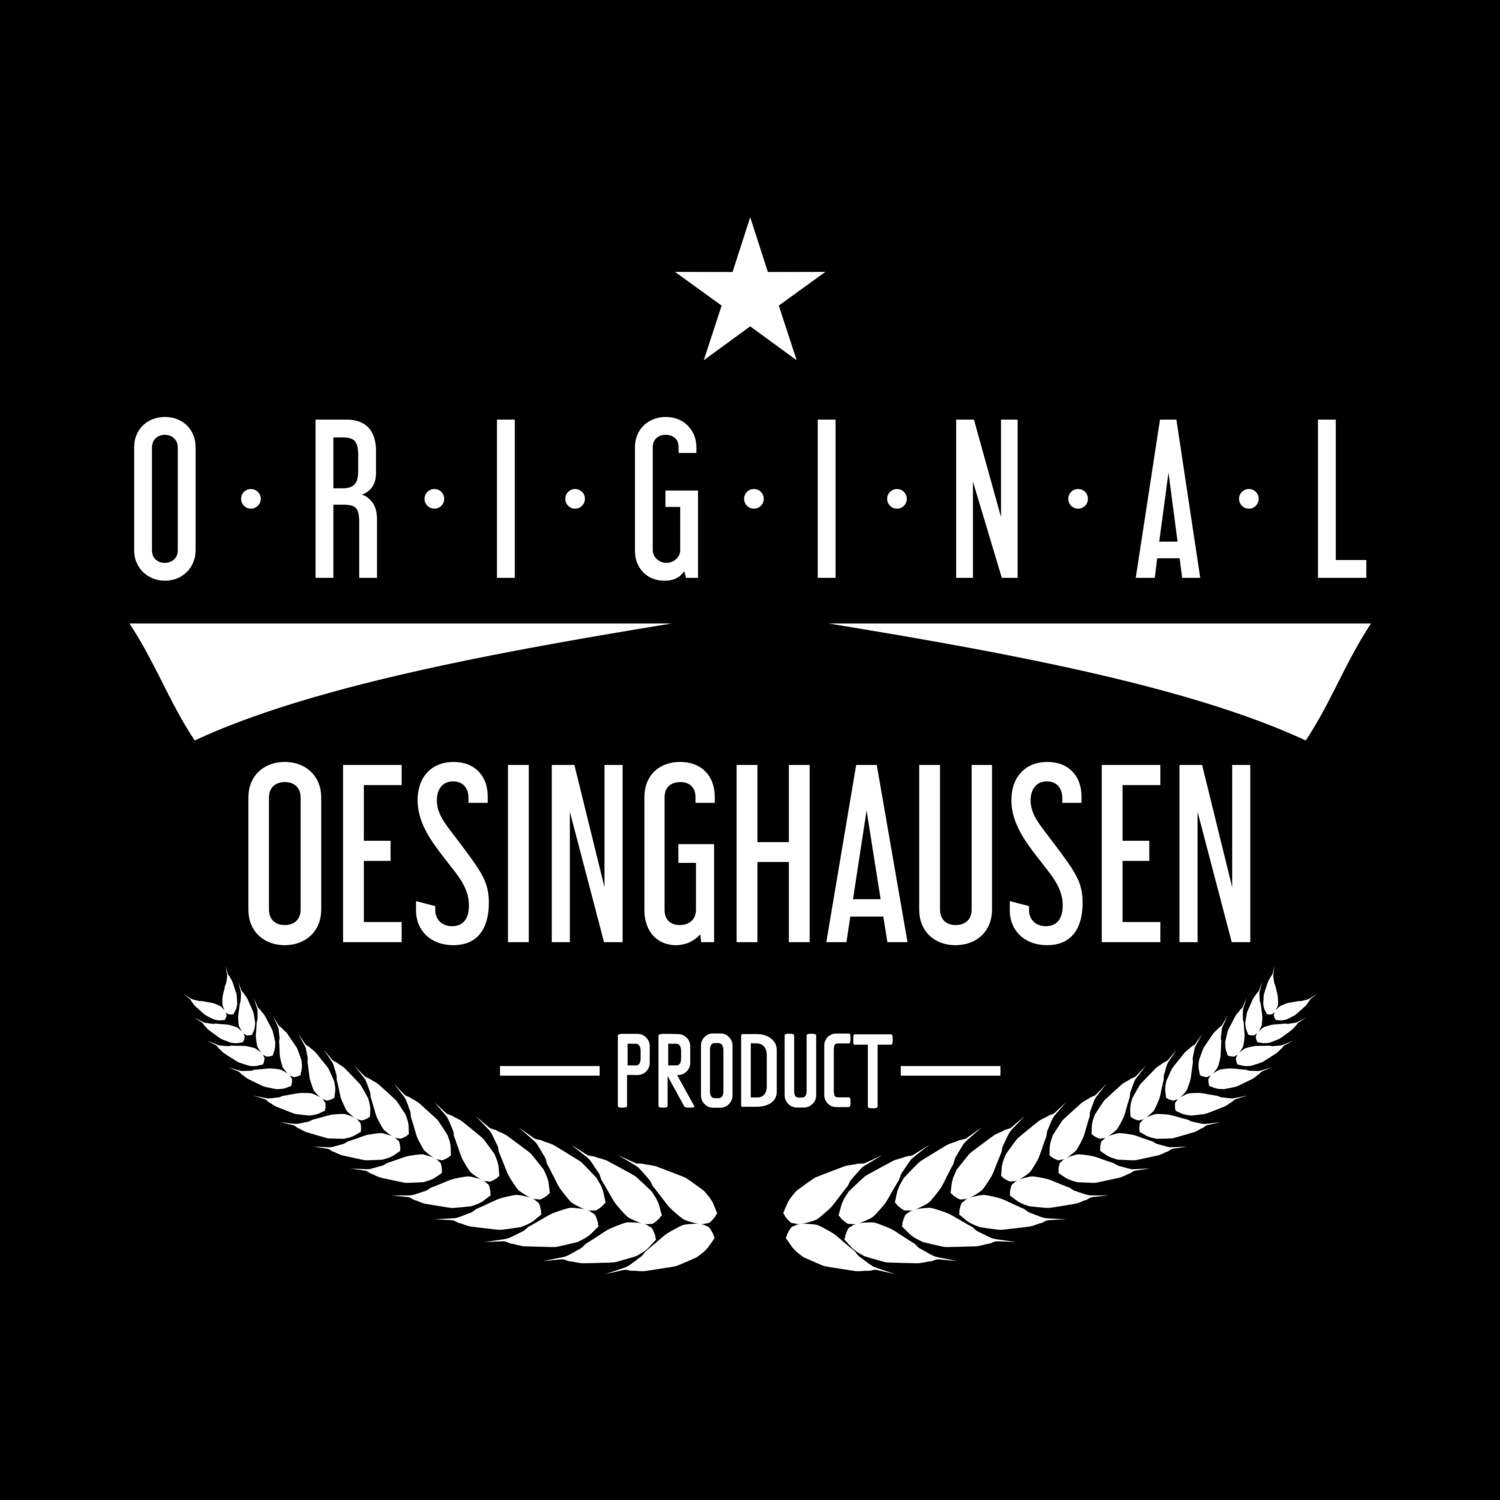 Oesinghausen T-Shirt »Original Product«